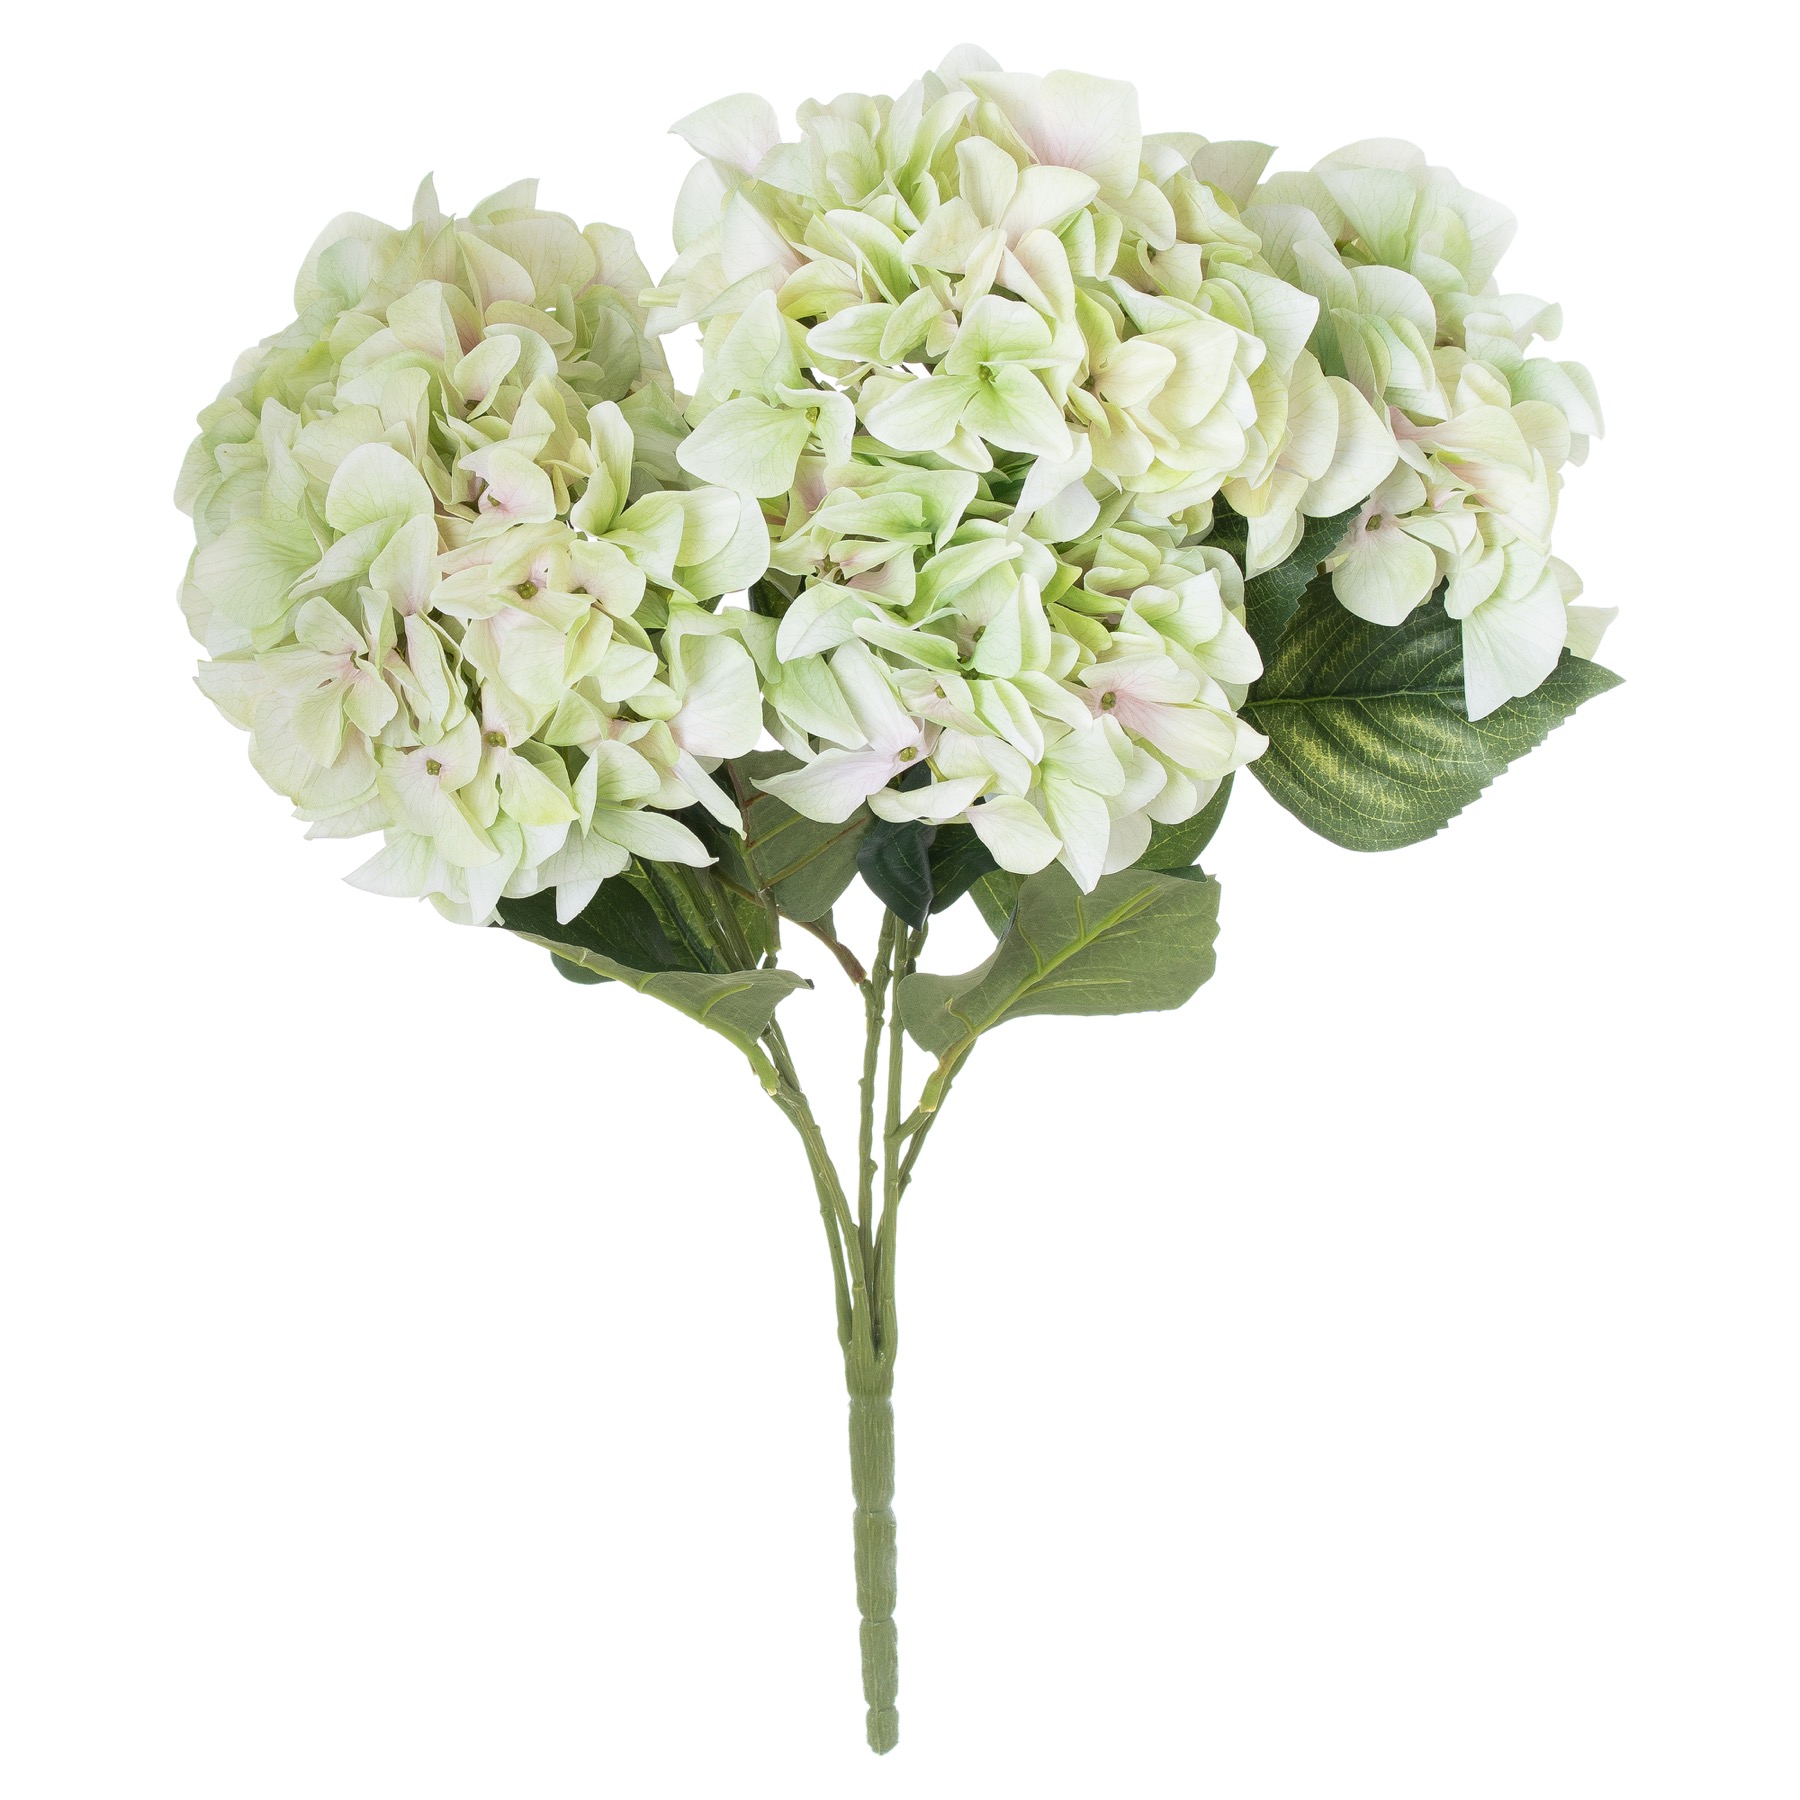 Shabby Green Hydrangea Bouquet - Image 1